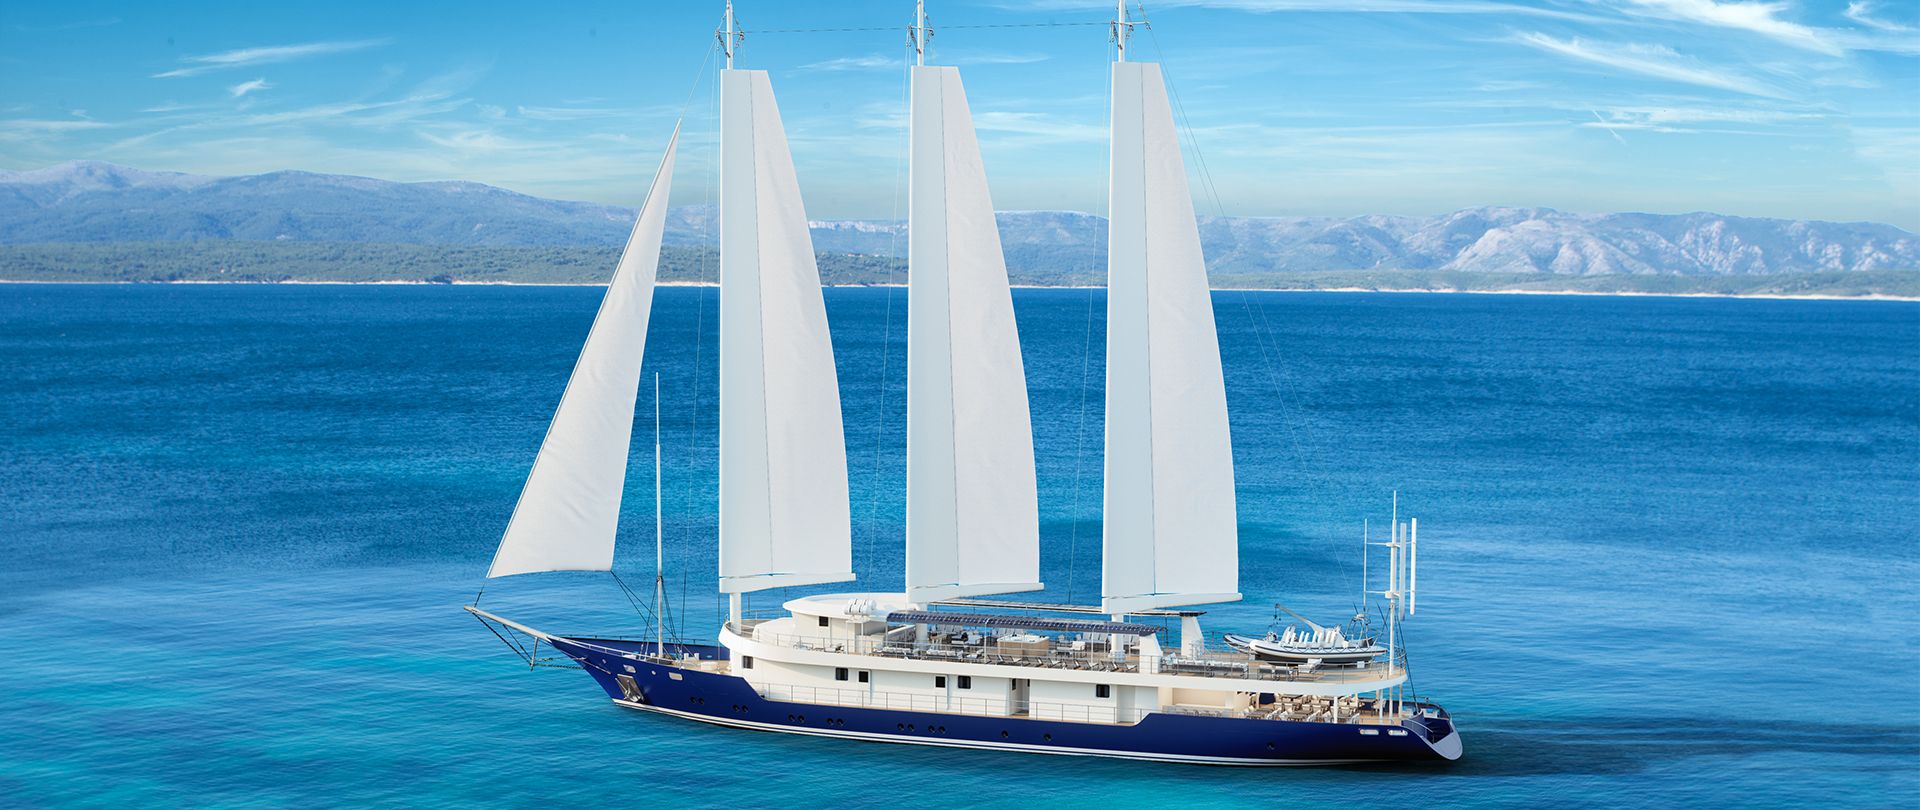 Brodosplit To Build Zero-emission Passenger Sailing Ship (February 2022)